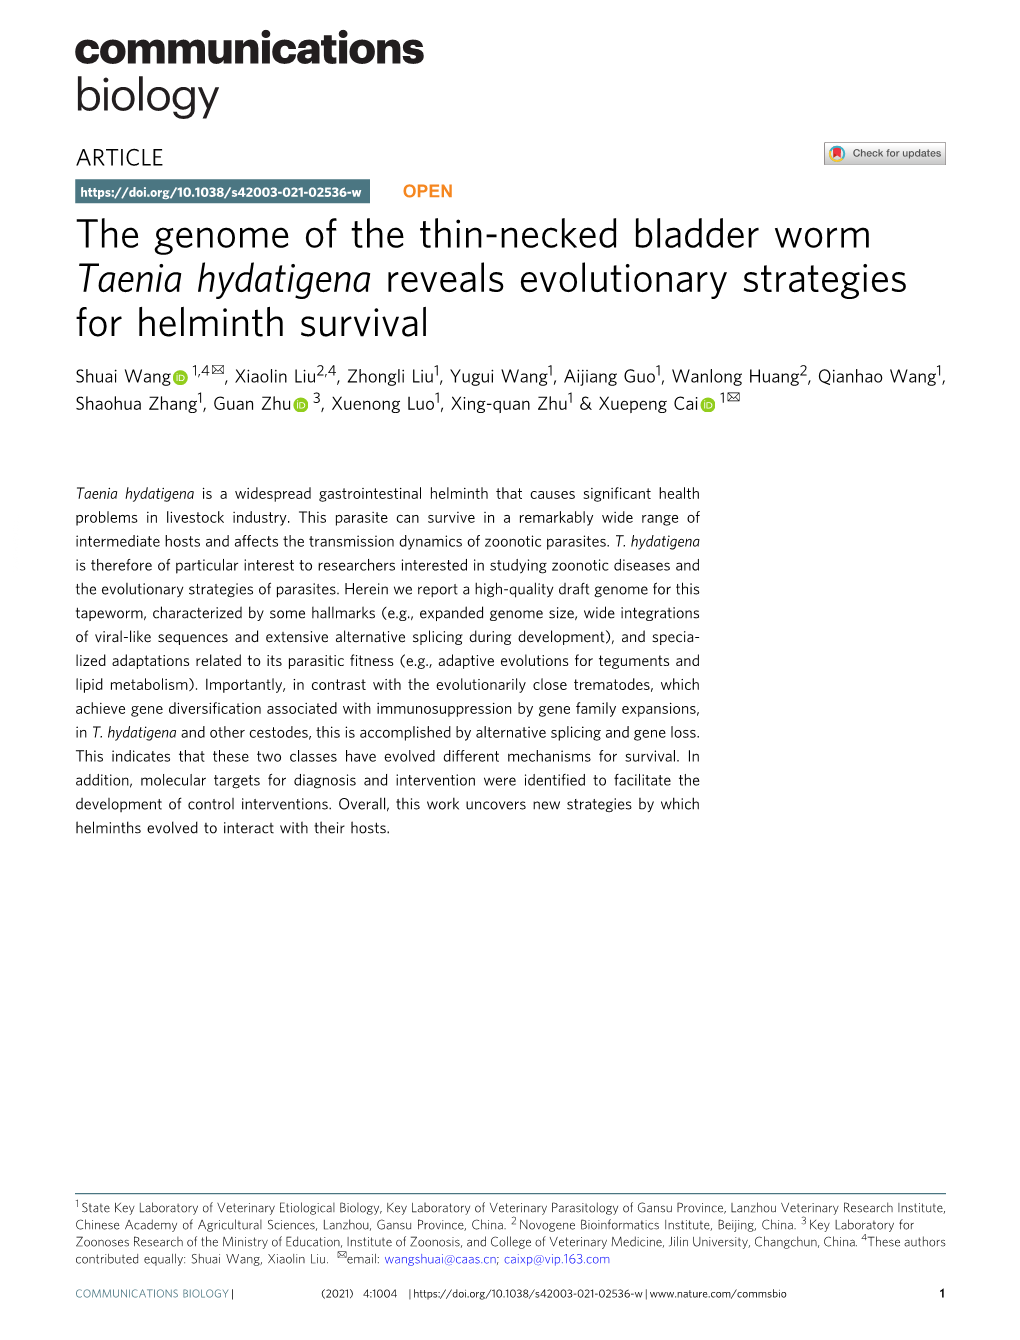 The Genome of the Thin-Necked Bladder Worm Taenia Hydatigena